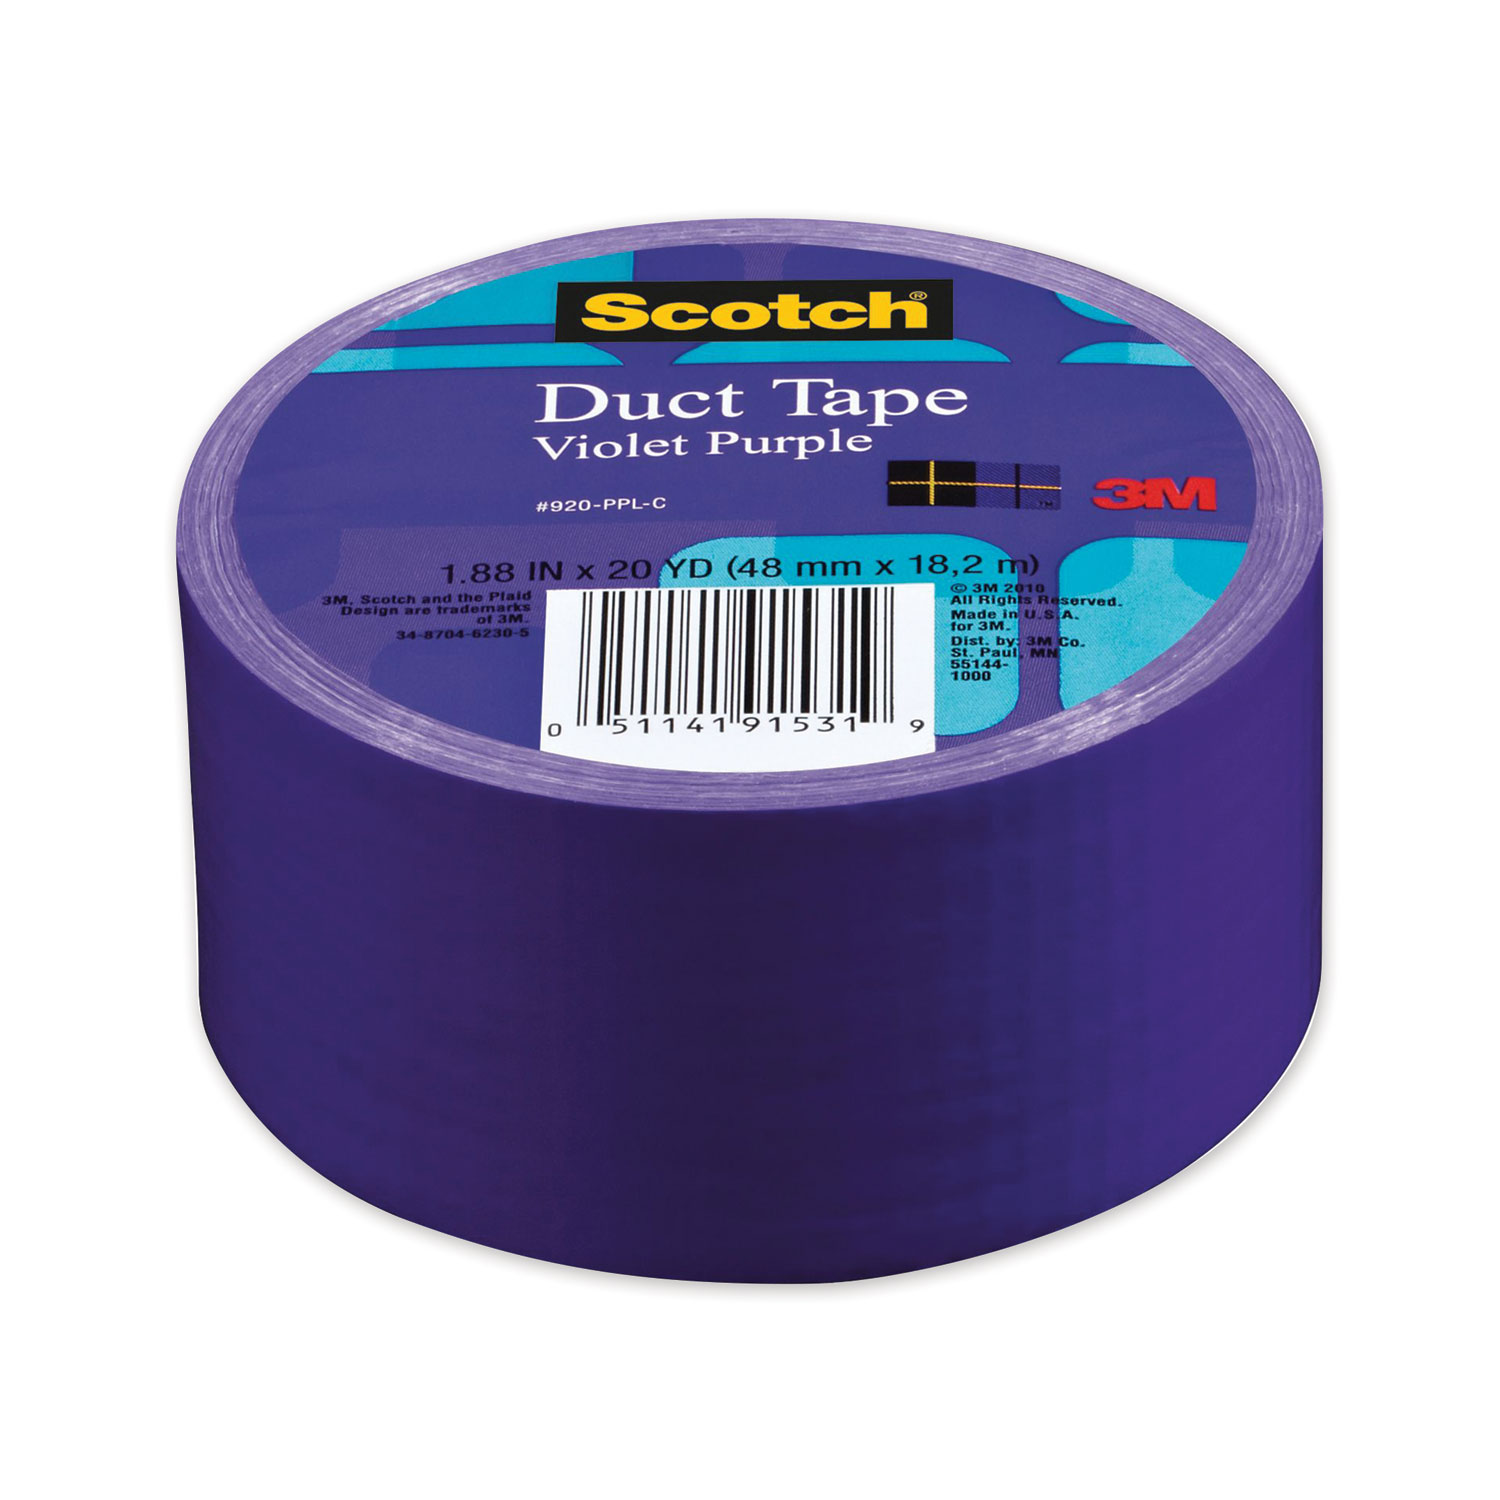  Scotch 920-PPL-C Duct Tape, 1.88 x 20 yds, Violet Purple (MMM70005059251) 